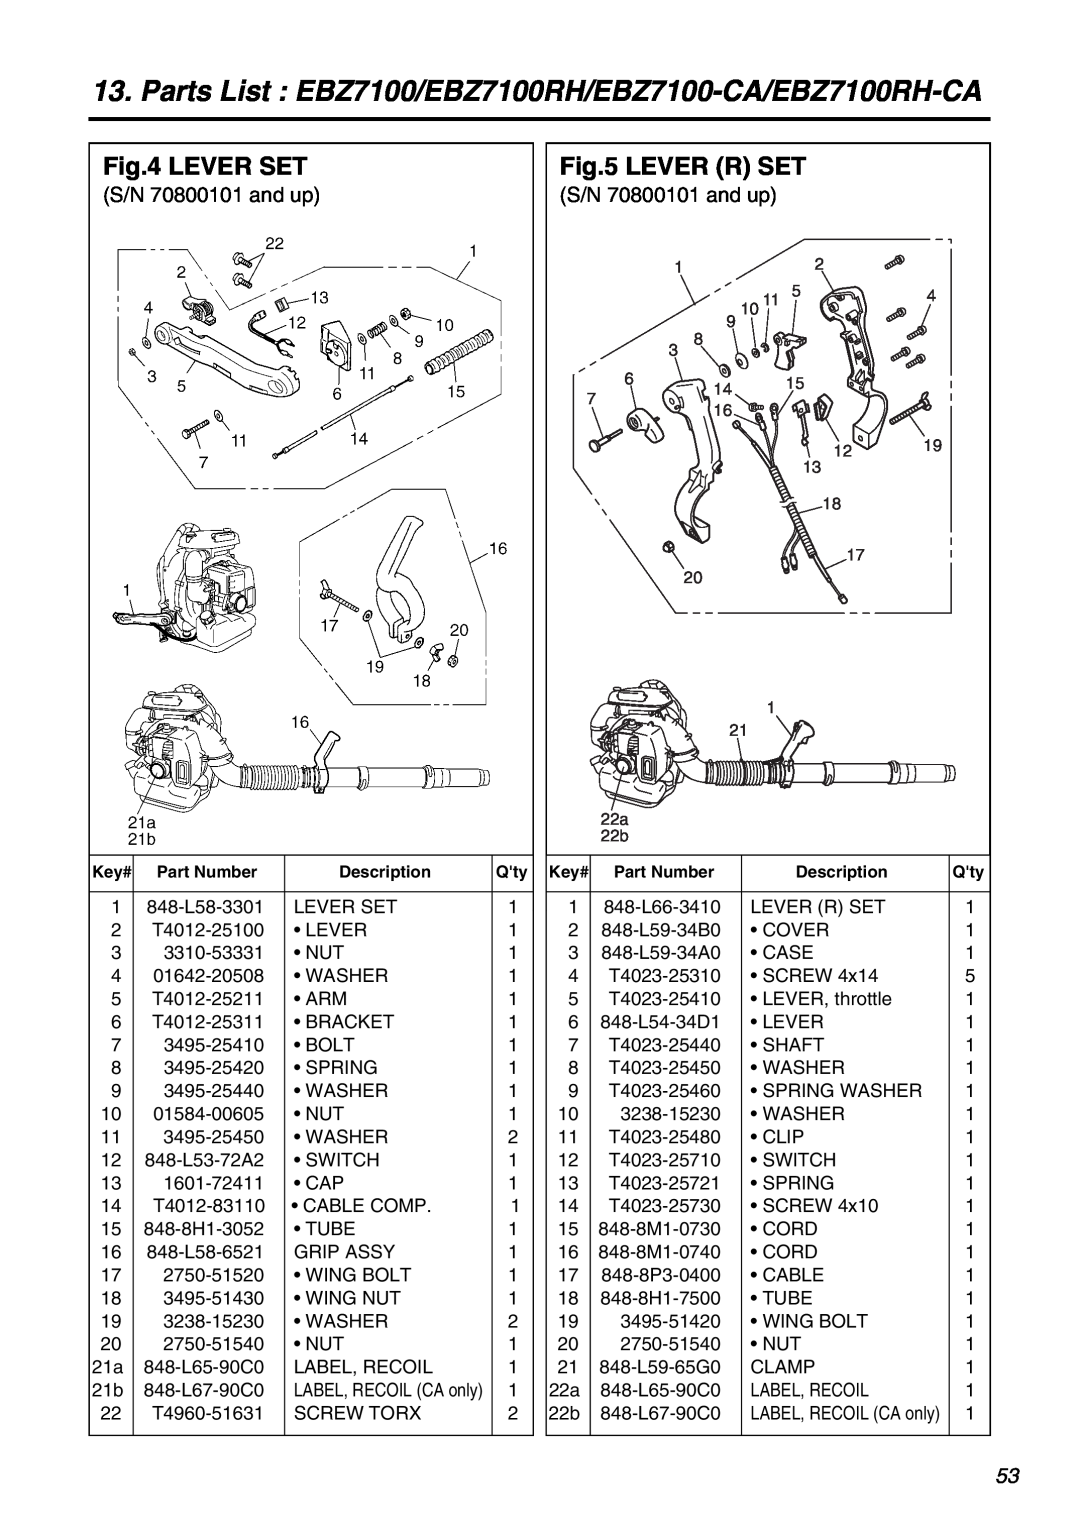 RedMax manual Lever Set, Lever R Set, Parts List EBZ7100/EBZ7100RH/EBZ7100-CA/EBZ7100RH-CA 